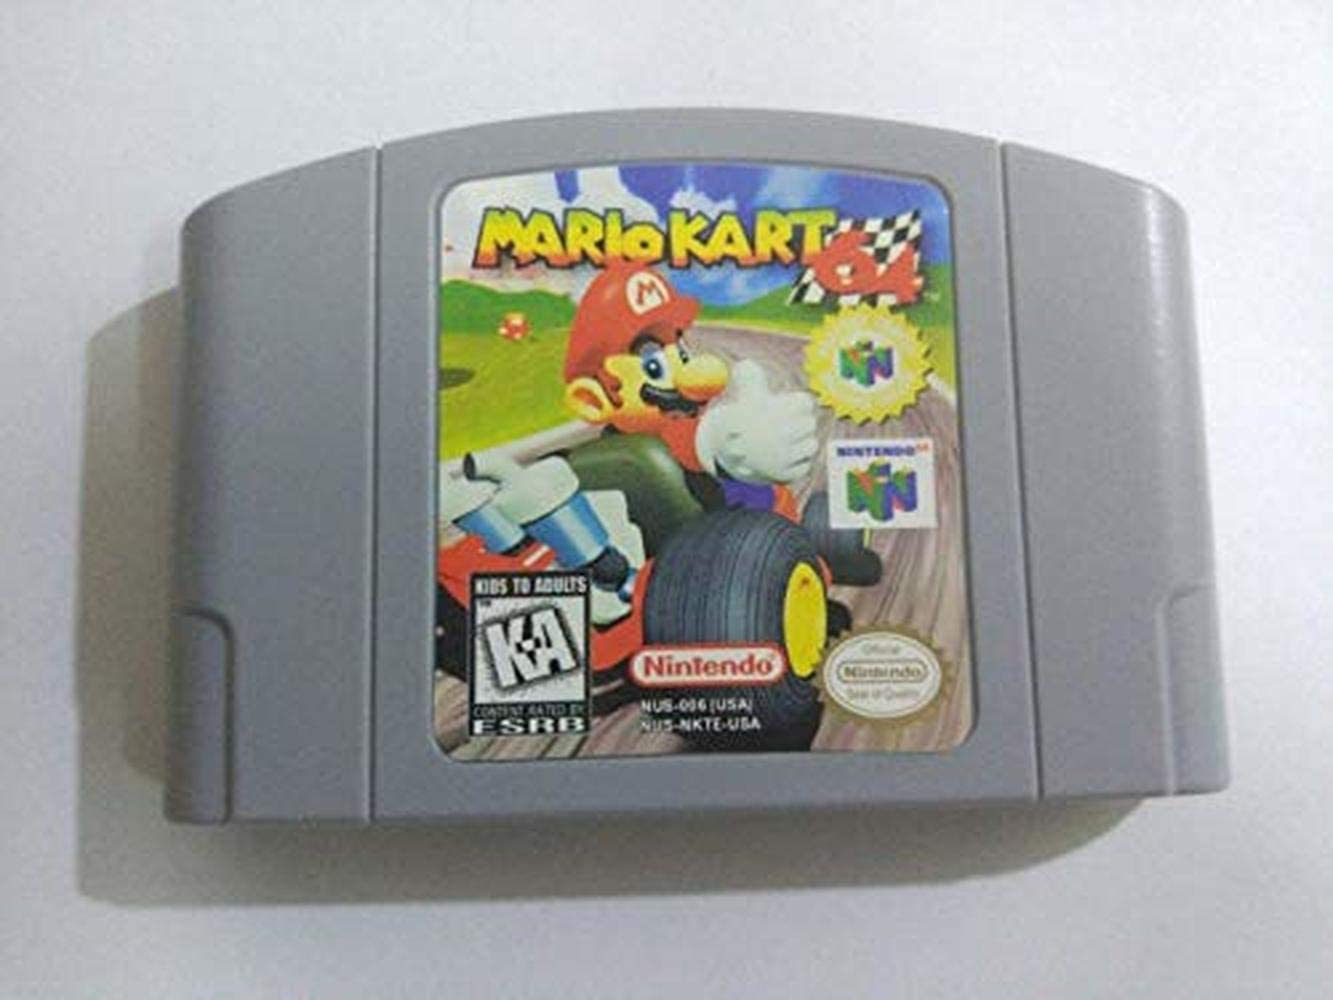 New for Nintendo N64 Mario Kart 64 VIDEO GAME Cartridge Card US Version